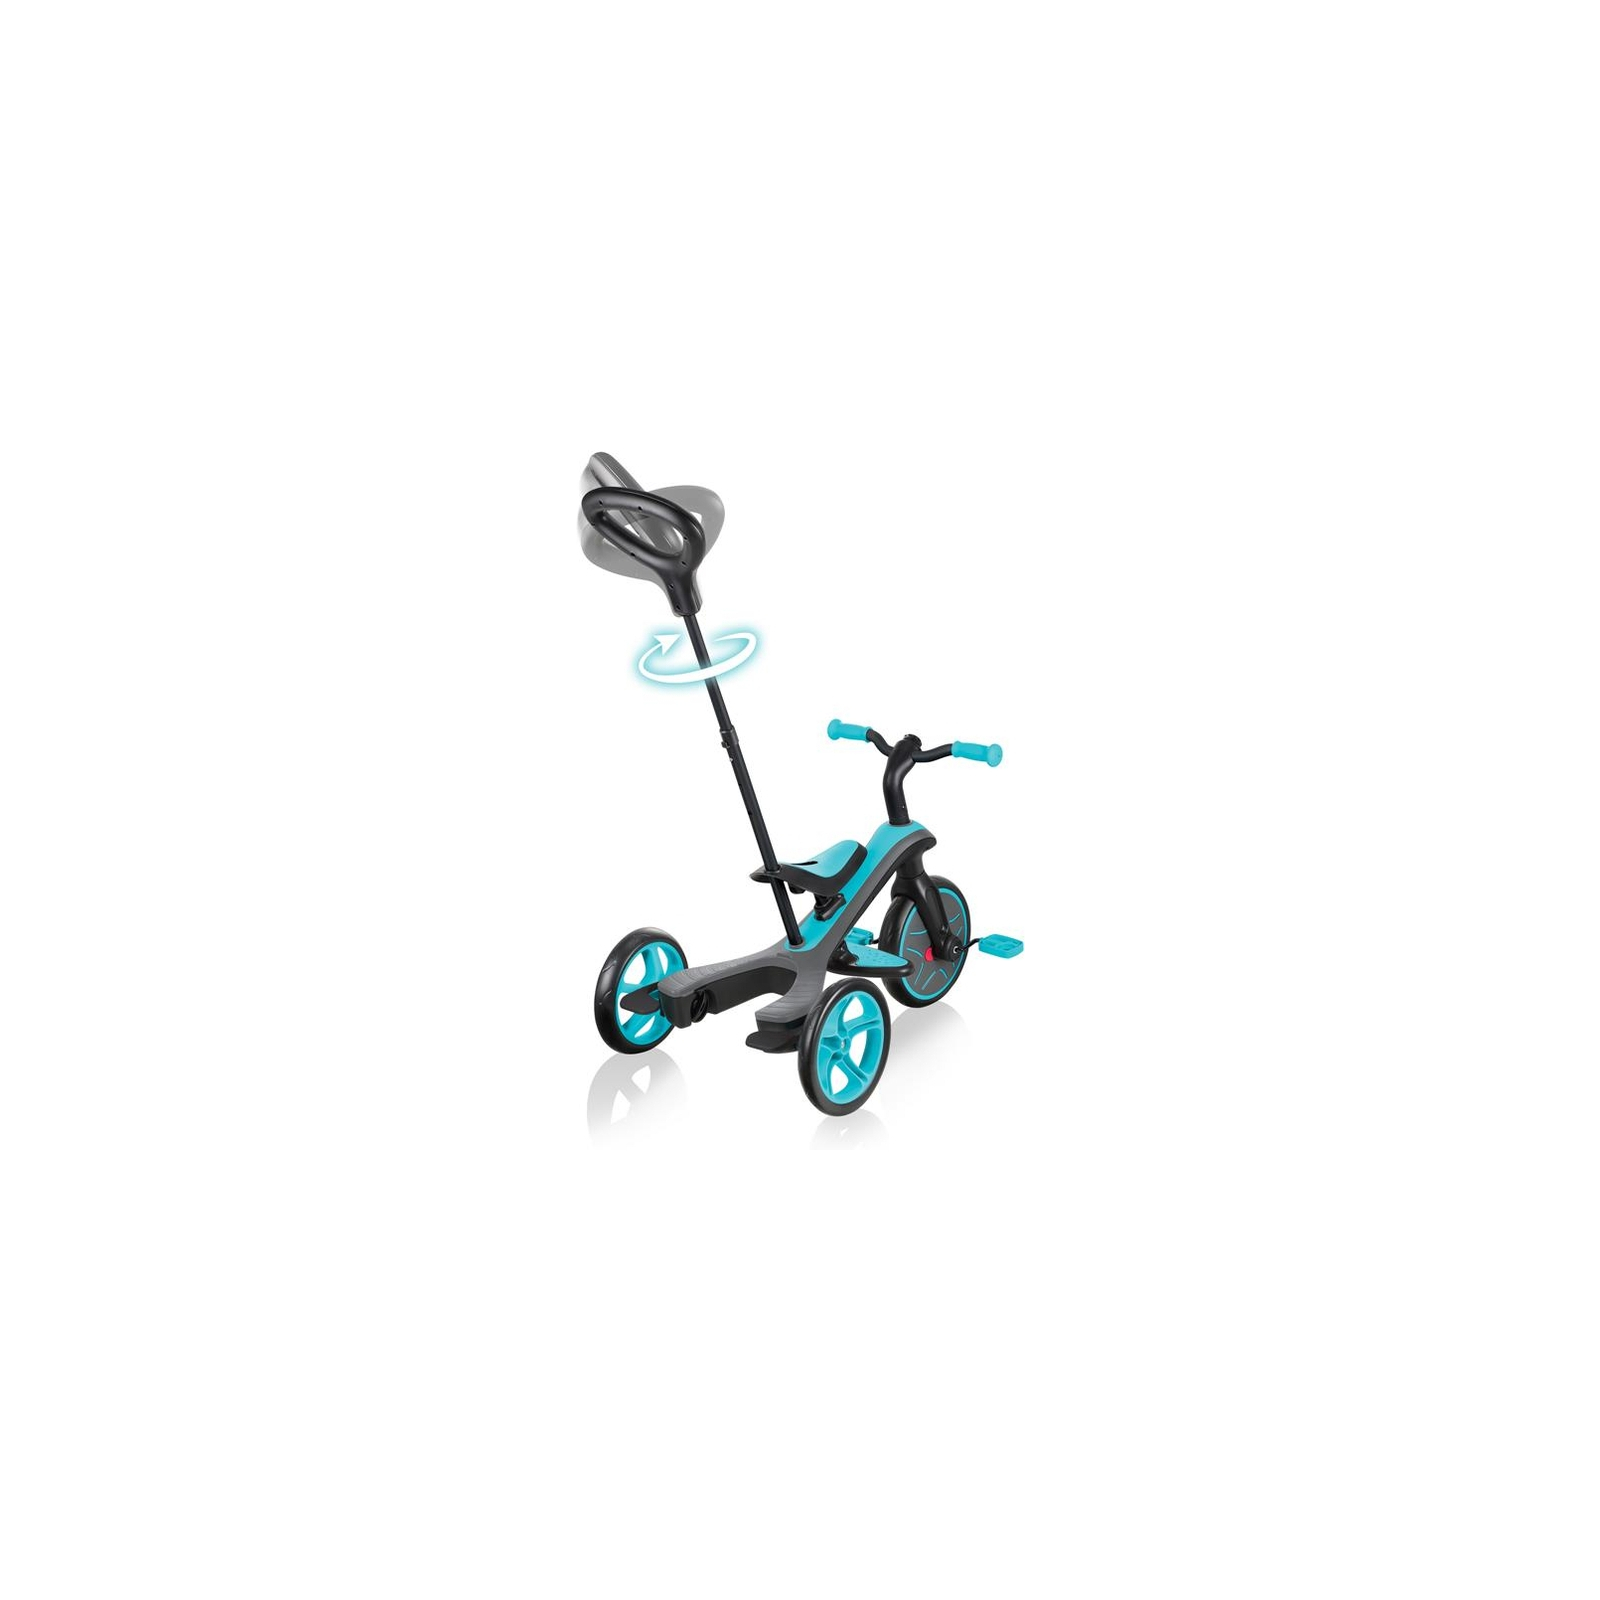 Дитячий велосипед Globber 4 в 1 Explorer Trike Teal Turquoise (632-105-3) зображення 3